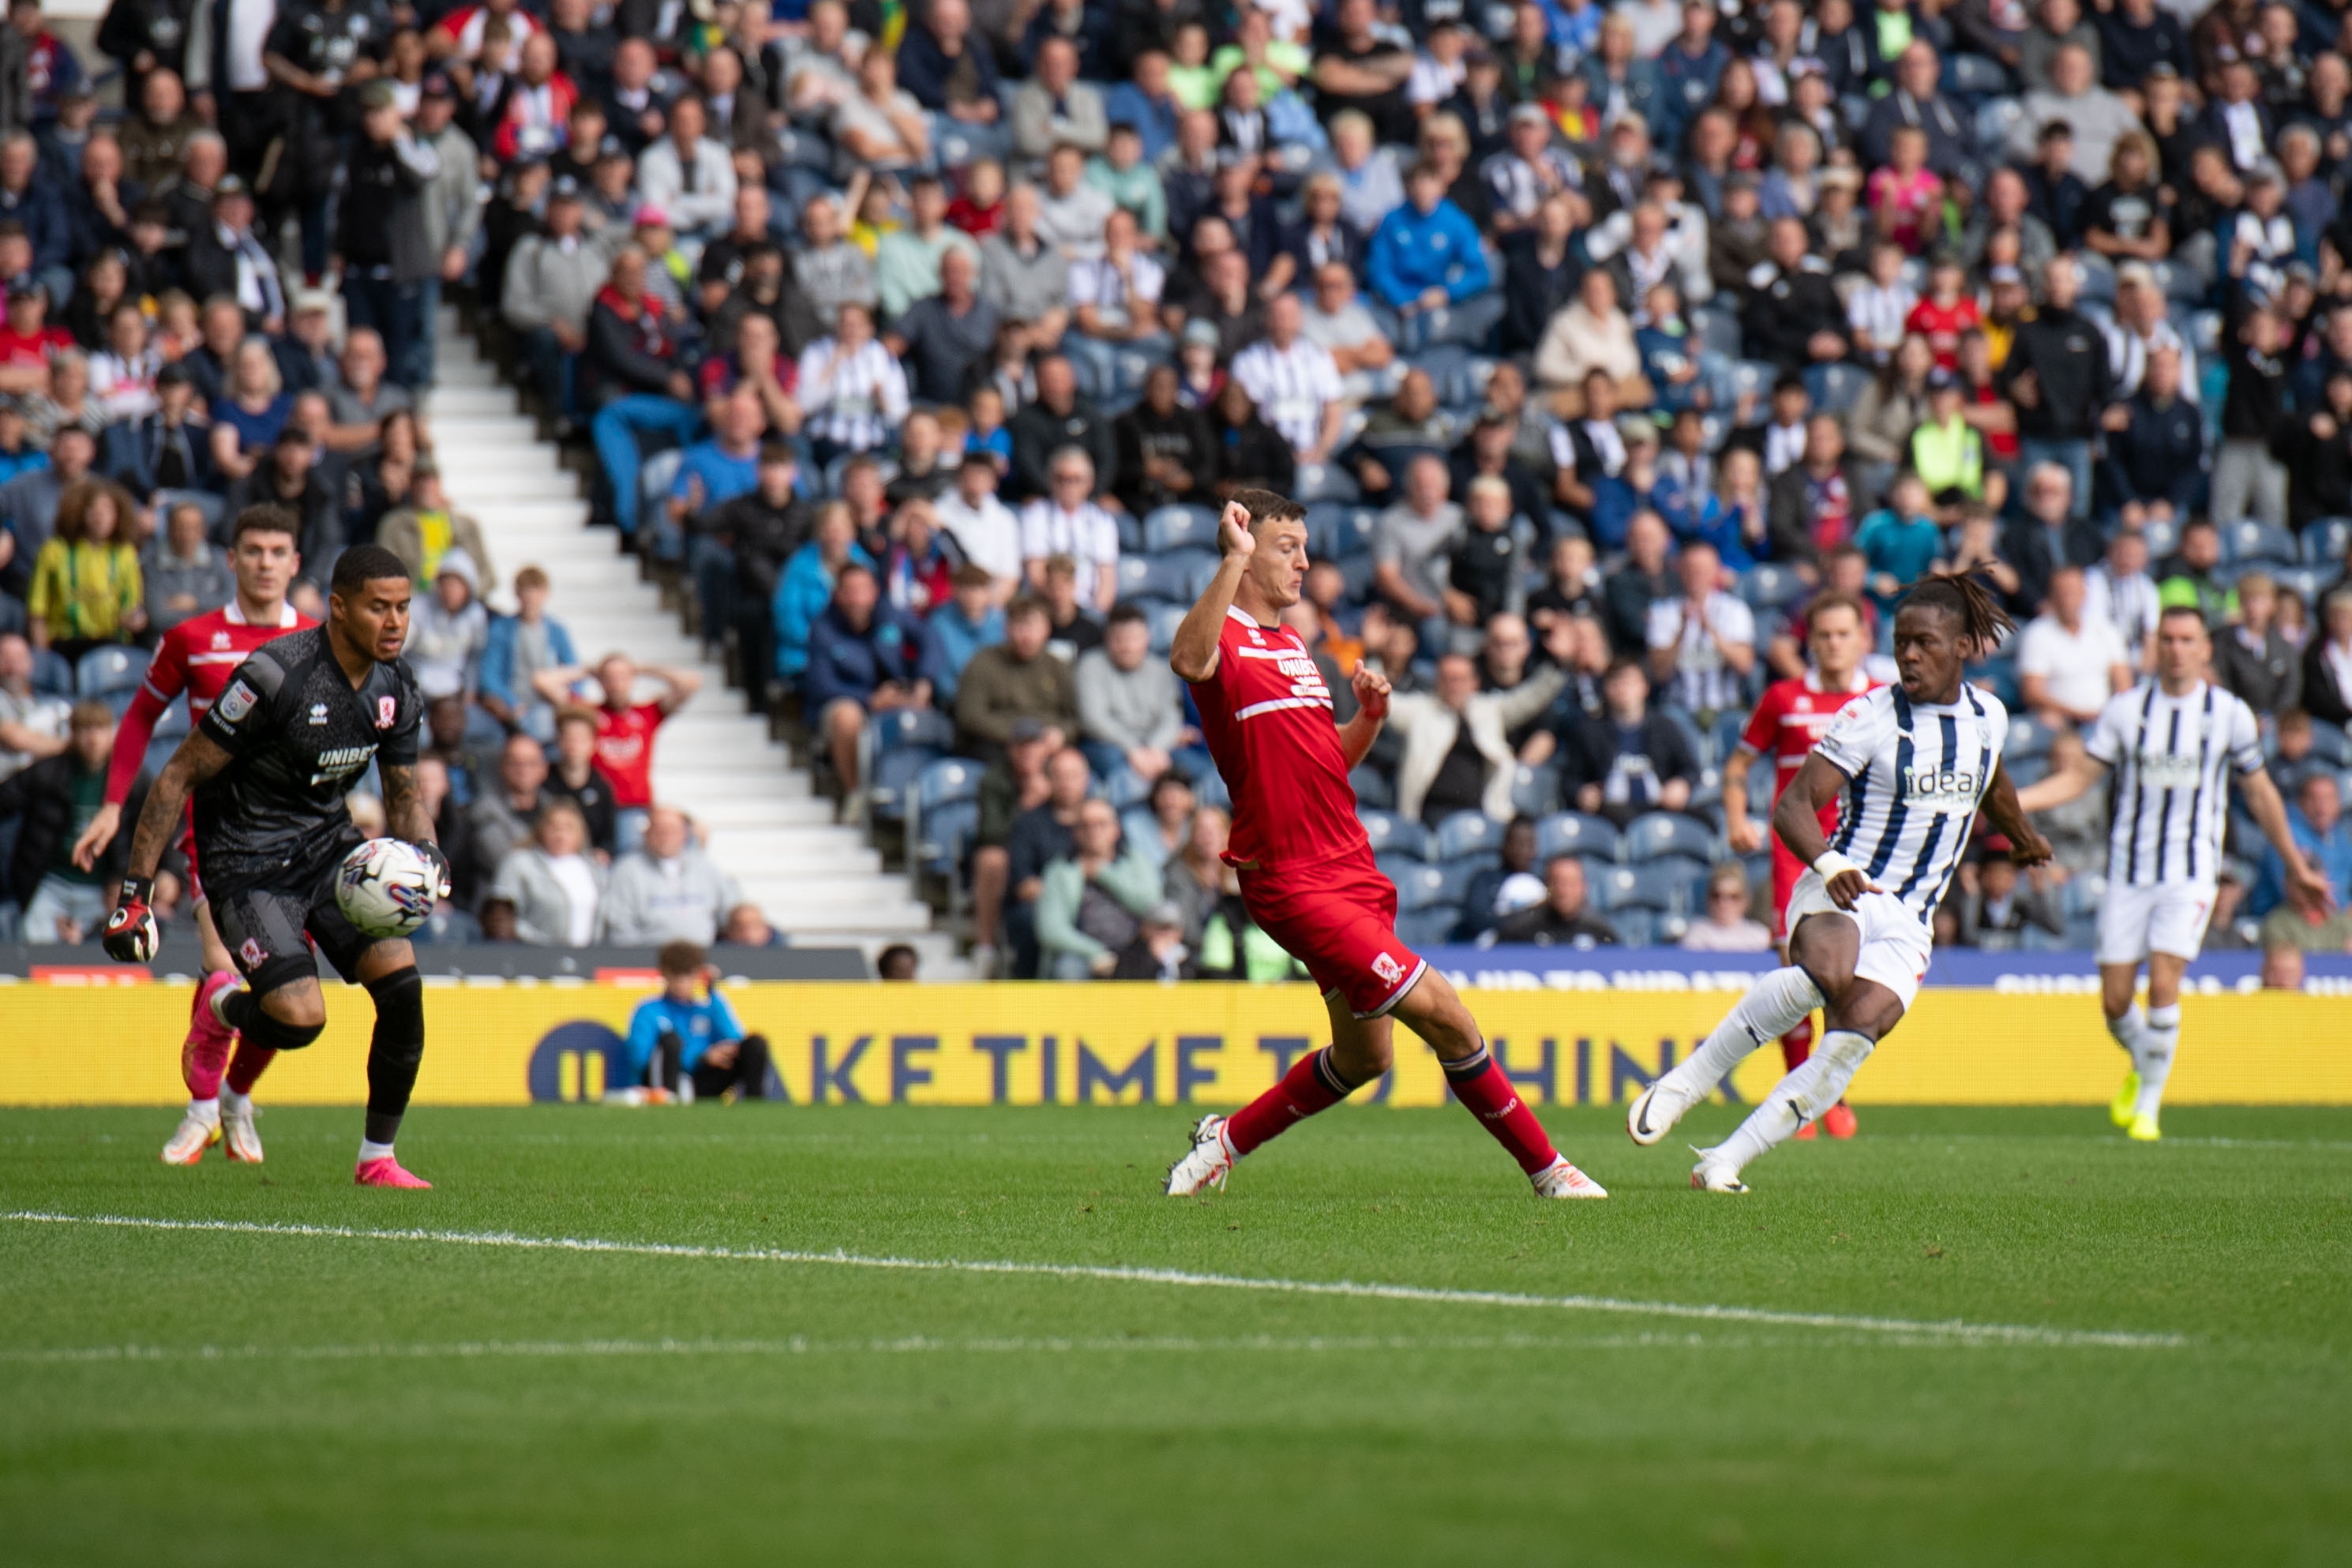 Brandon Thomas-Asante shoots against Middlesbrough